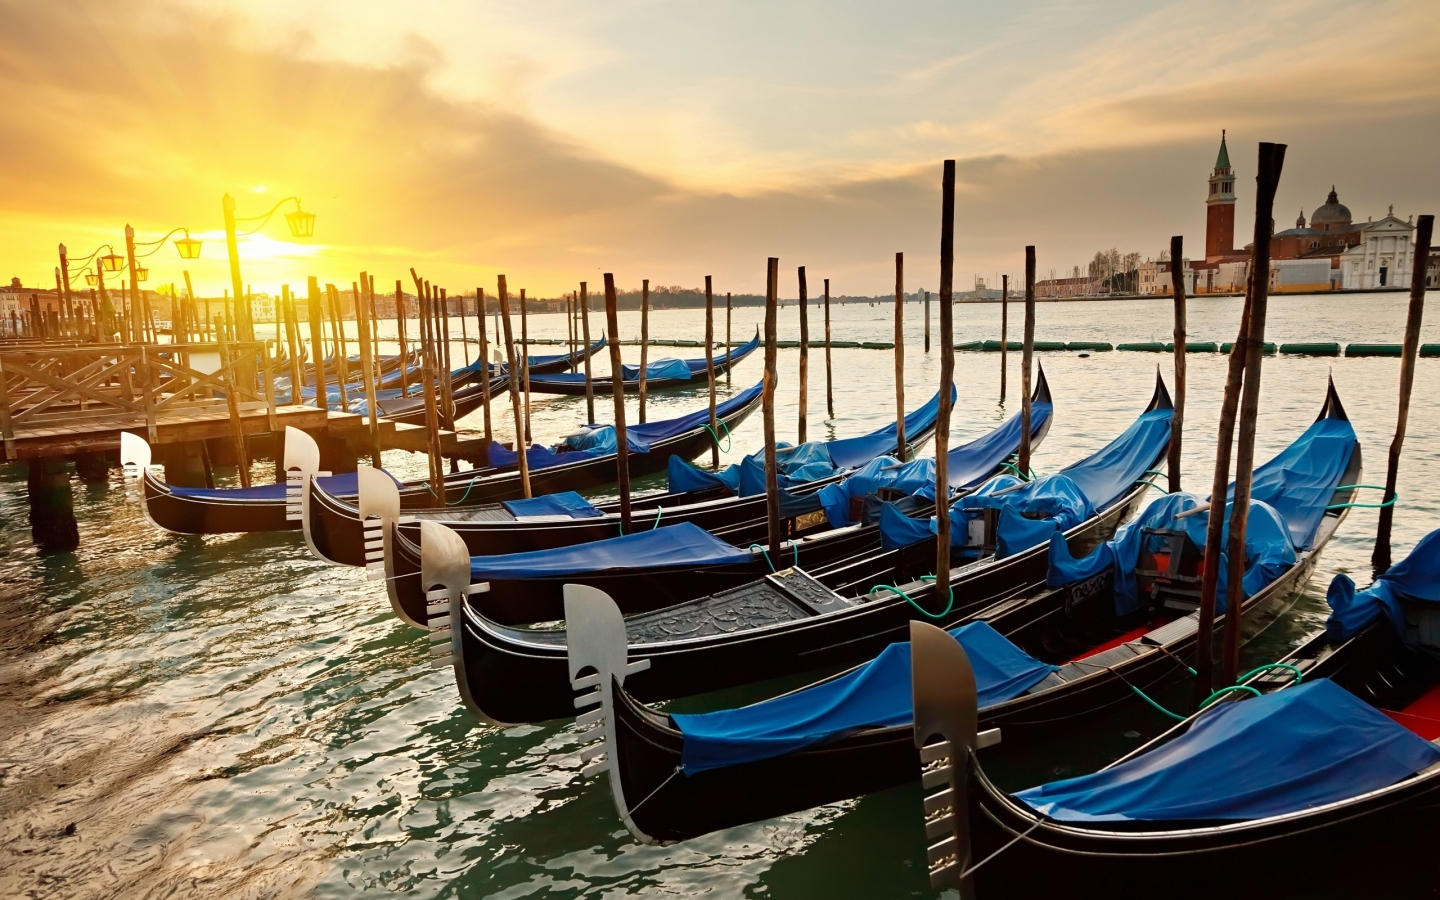 Venice Sunrise for 1440 x 900 widescreen resolution